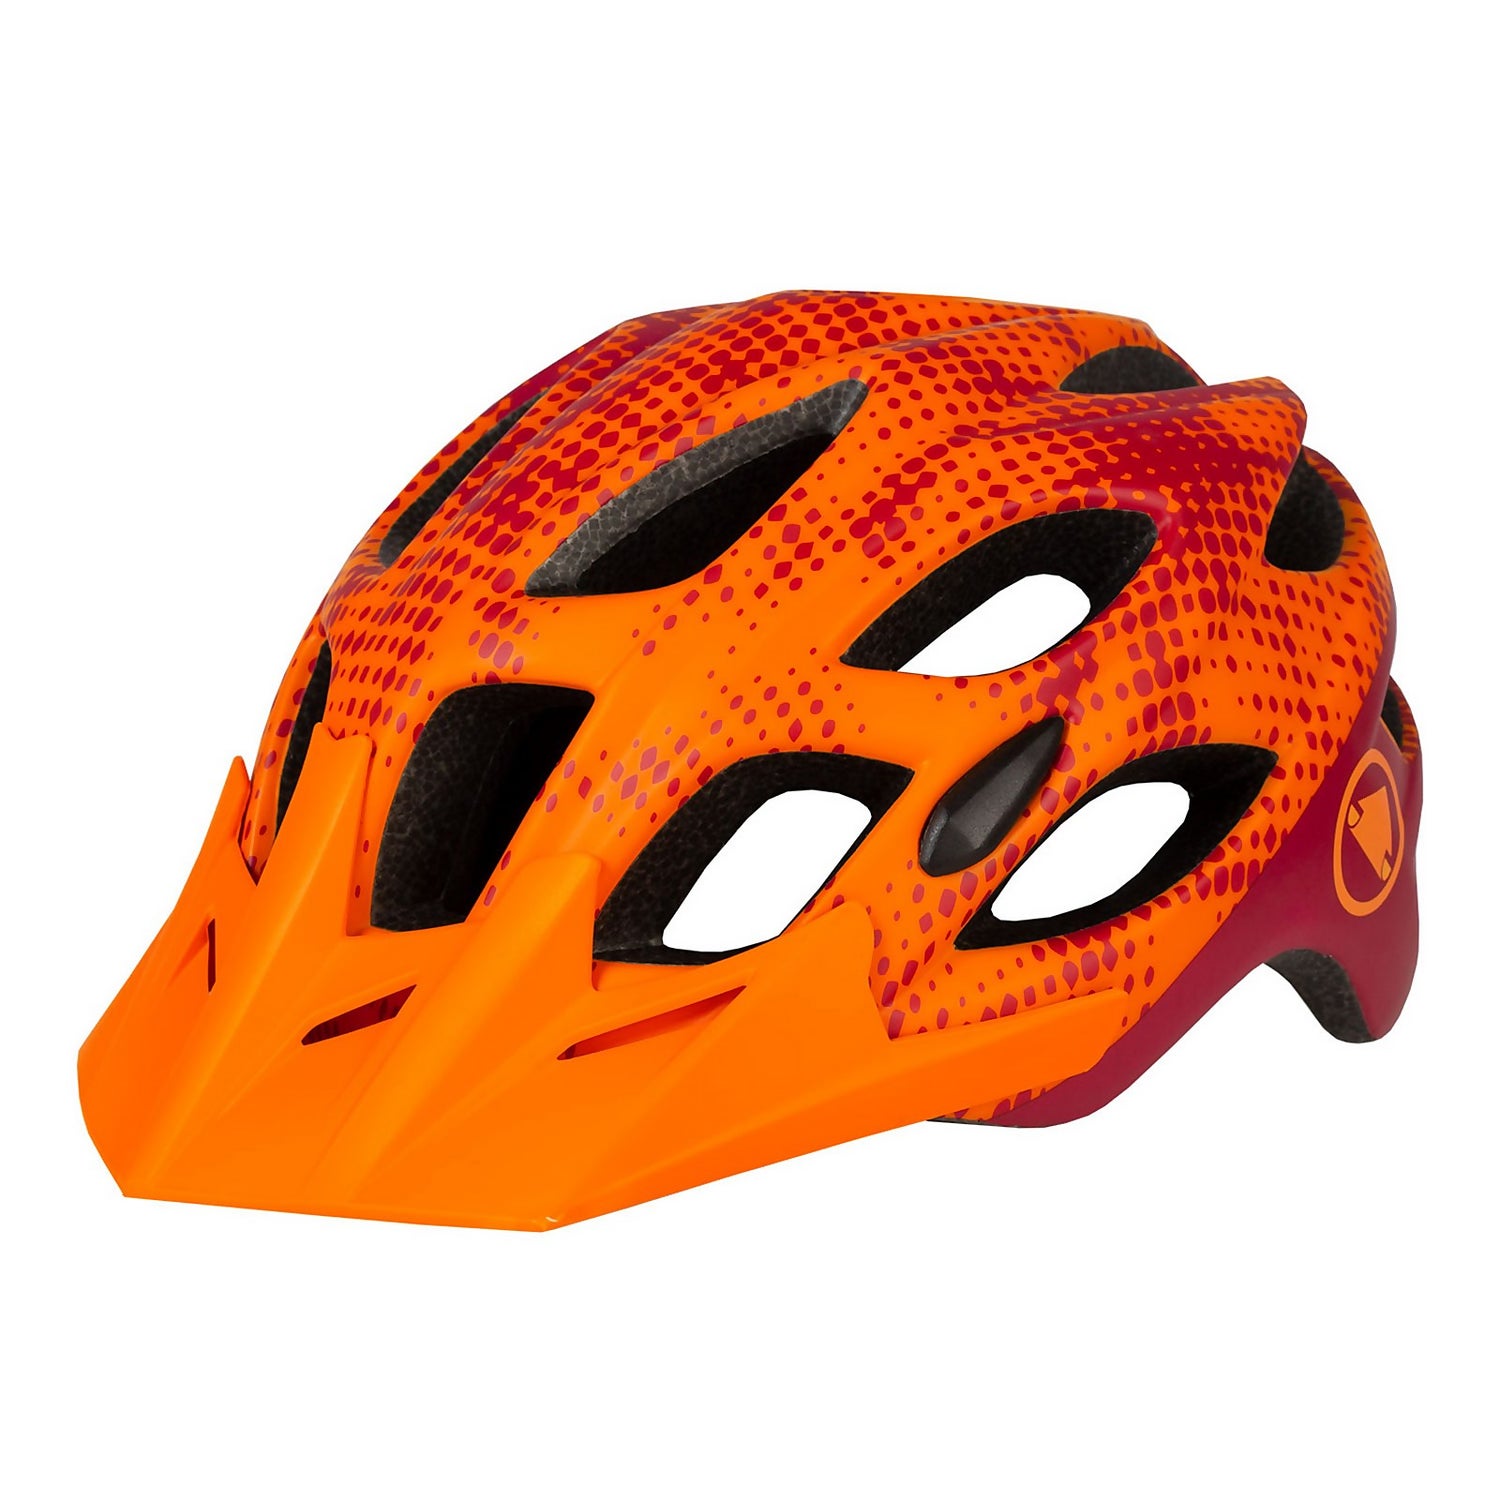 Hummvee Youth Helmet - Tangerine